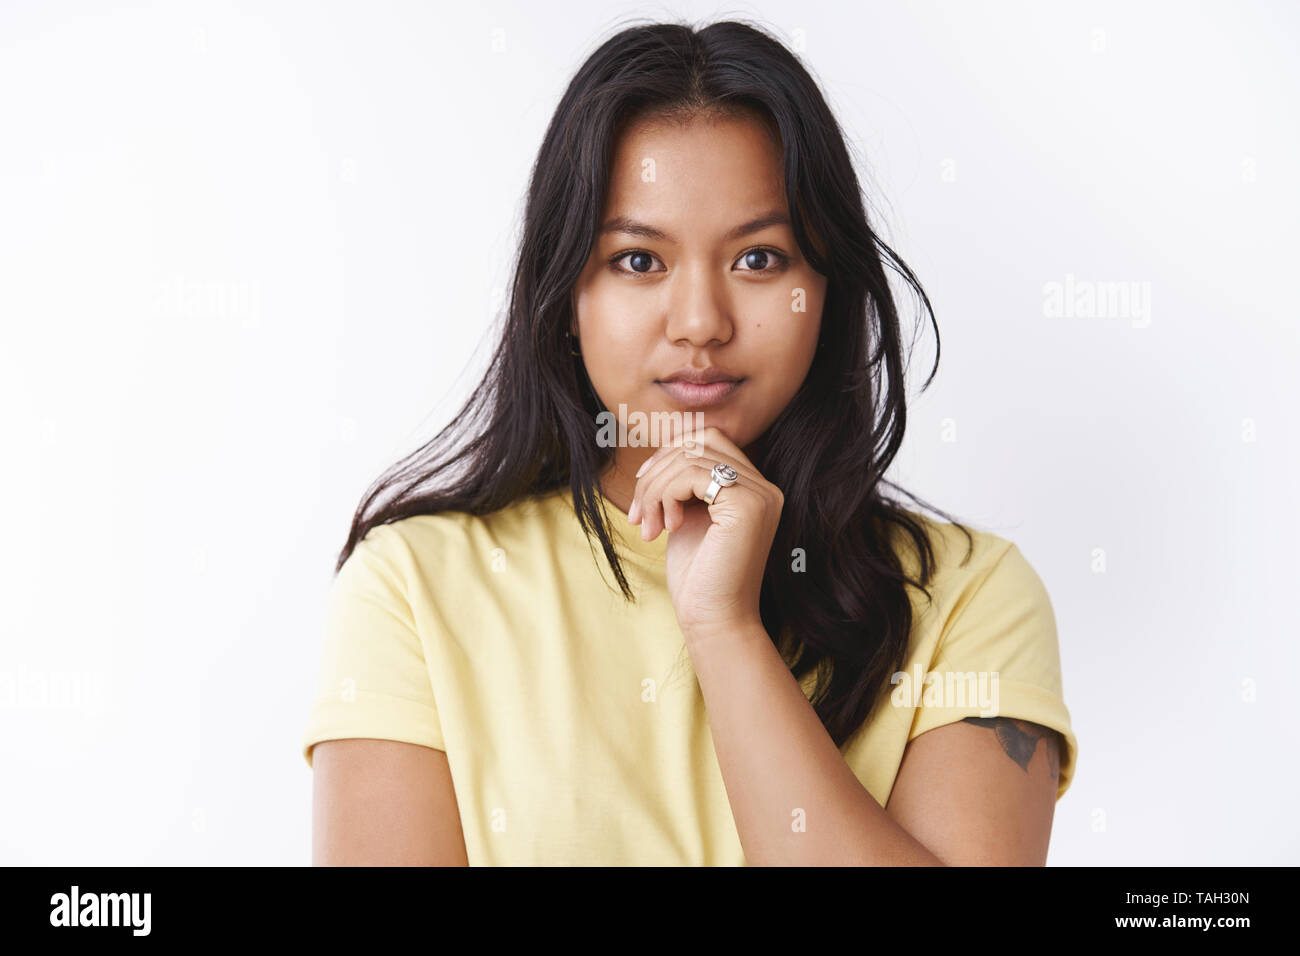 Malaysian Girl Stockfotos Und Bilder Kaufen Alamy